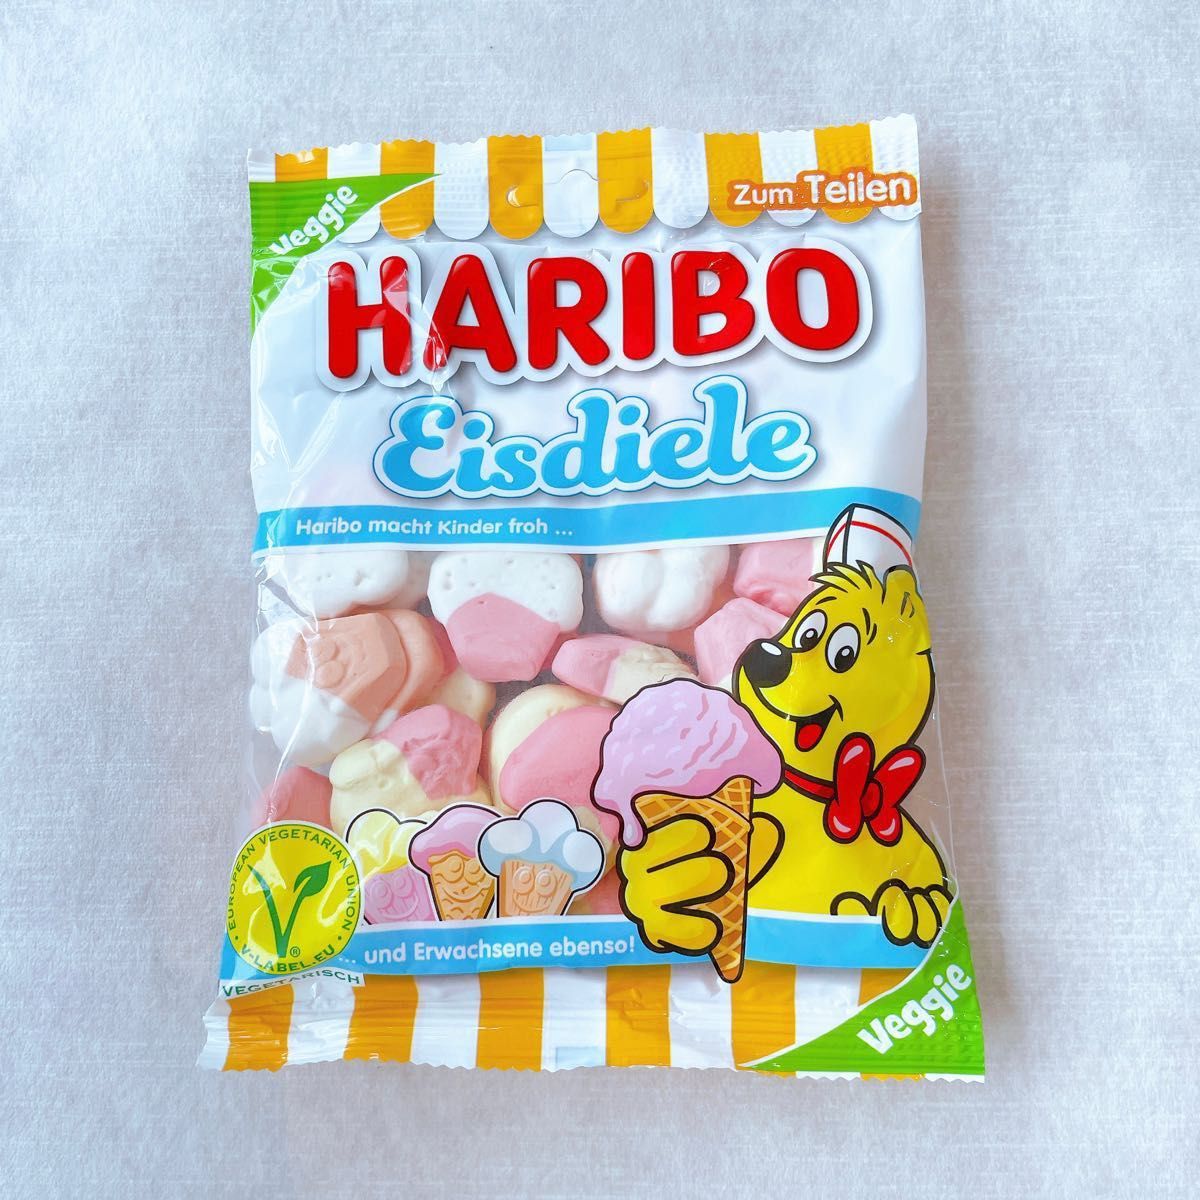 HARIBO【日本未販売】Eisdiele 160g アイスクリーム